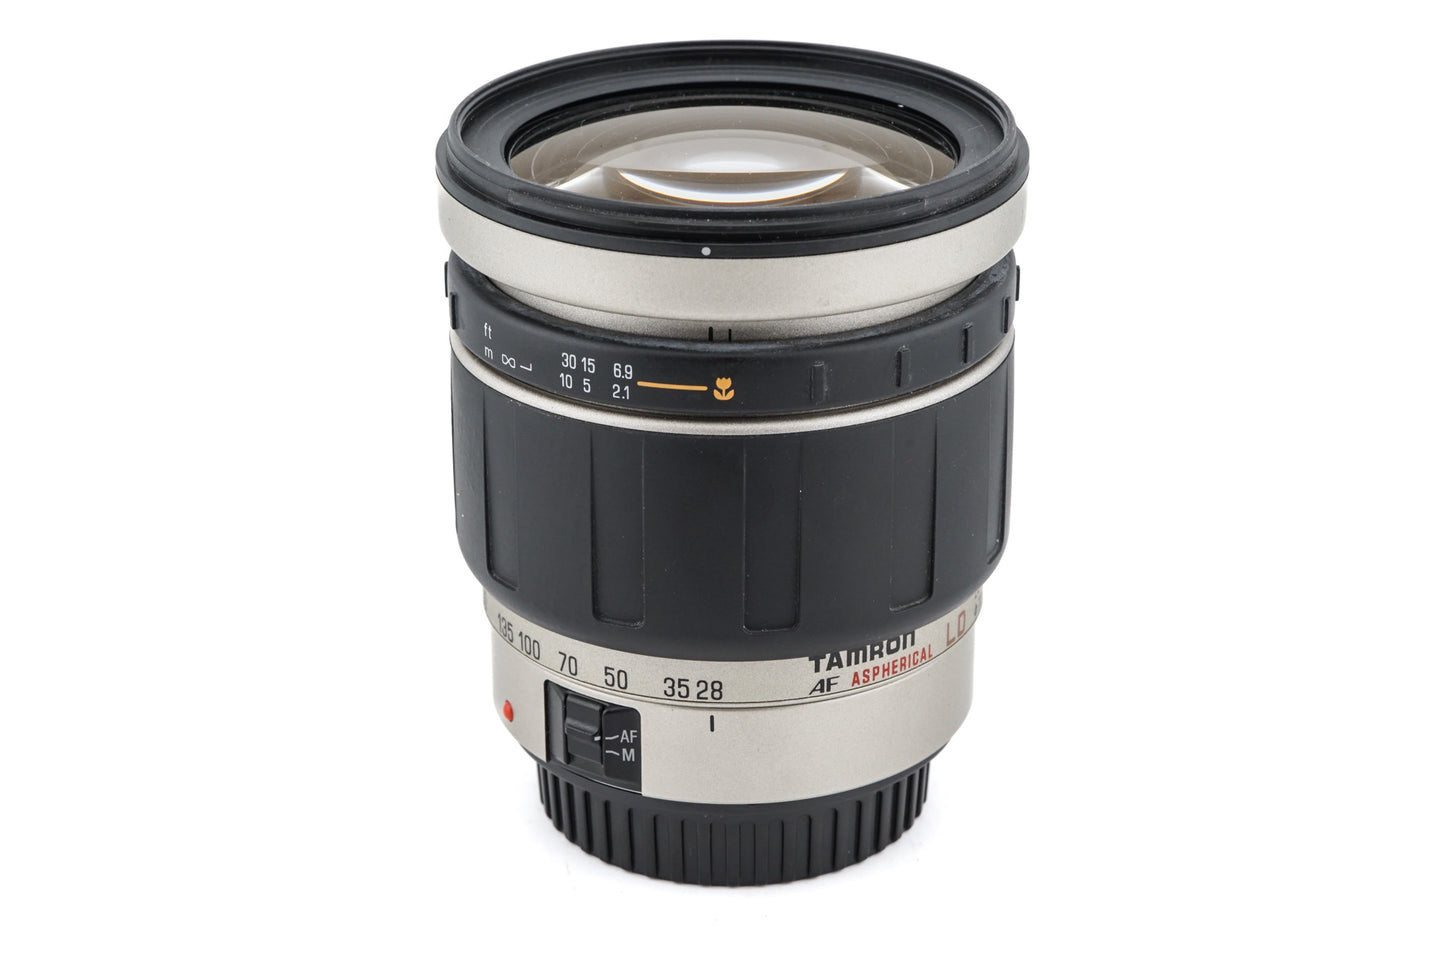 Tamron 28-200mm f3.8-5.6 Aspherical IF LD (271D) - Lens